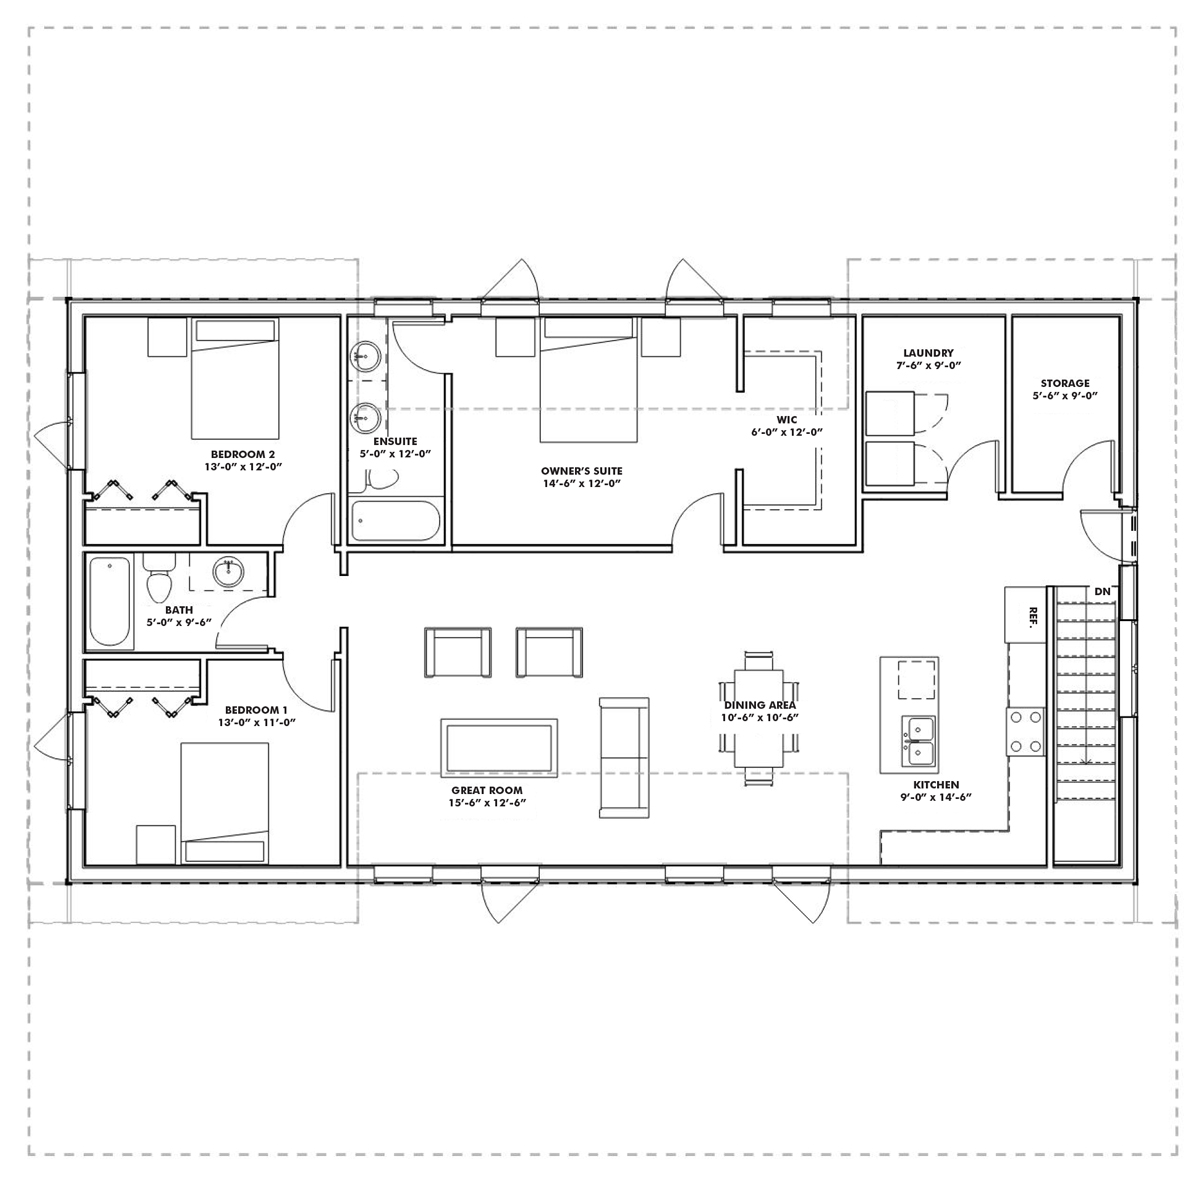 Carriage House XL floor plan 2nd floor